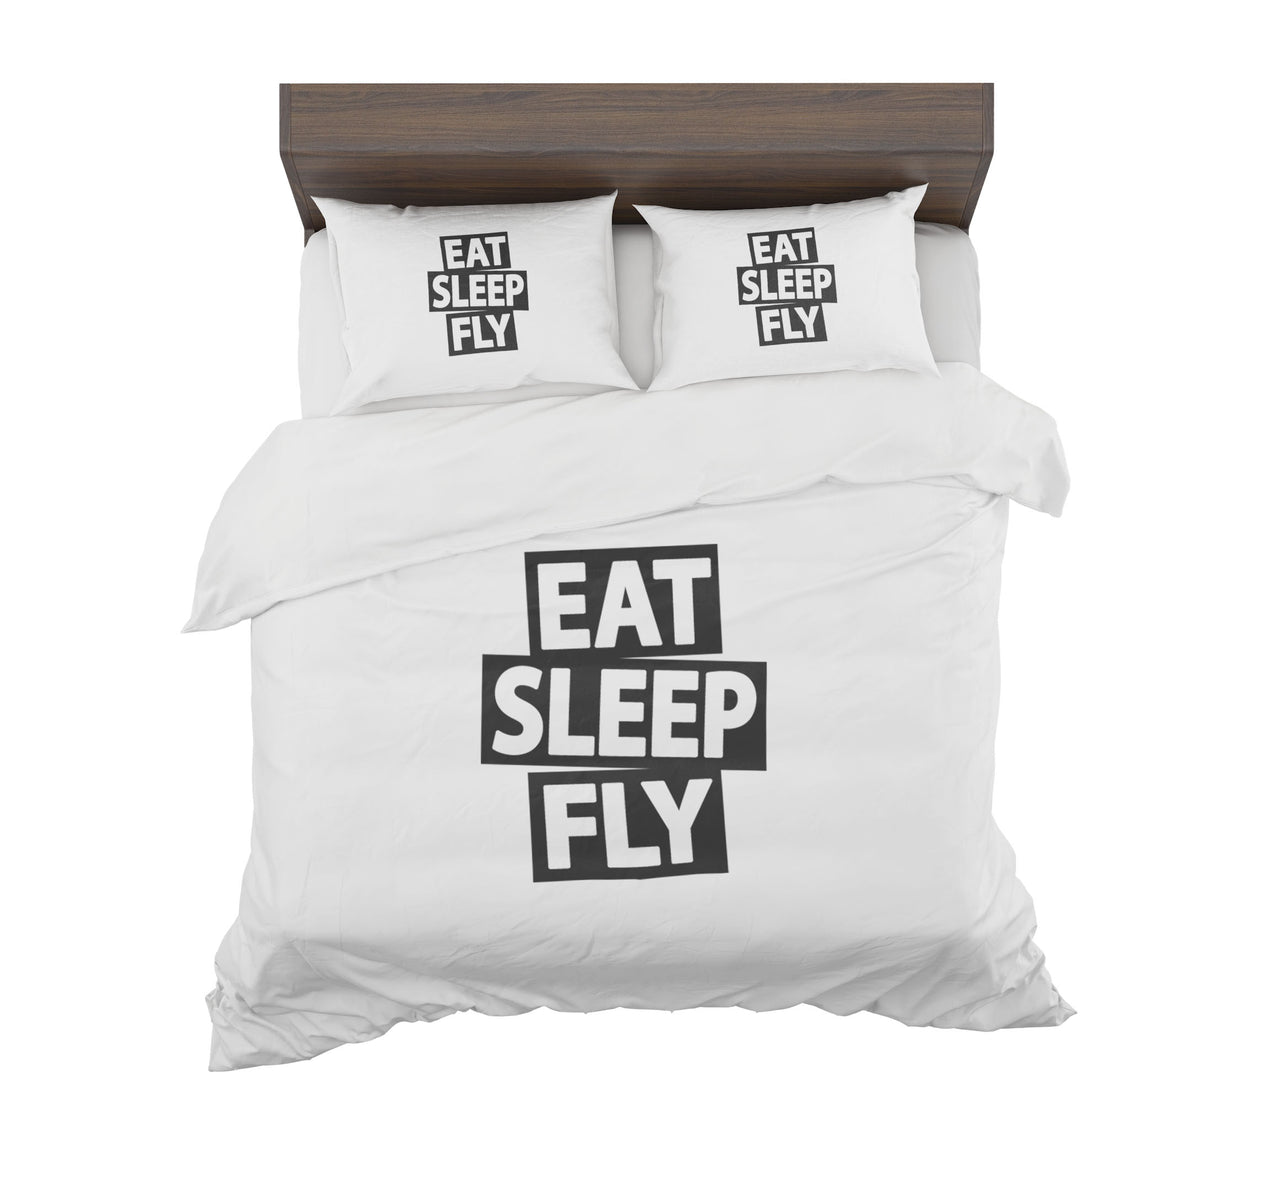 Eat Sleep Fly Designed Bedding Sets